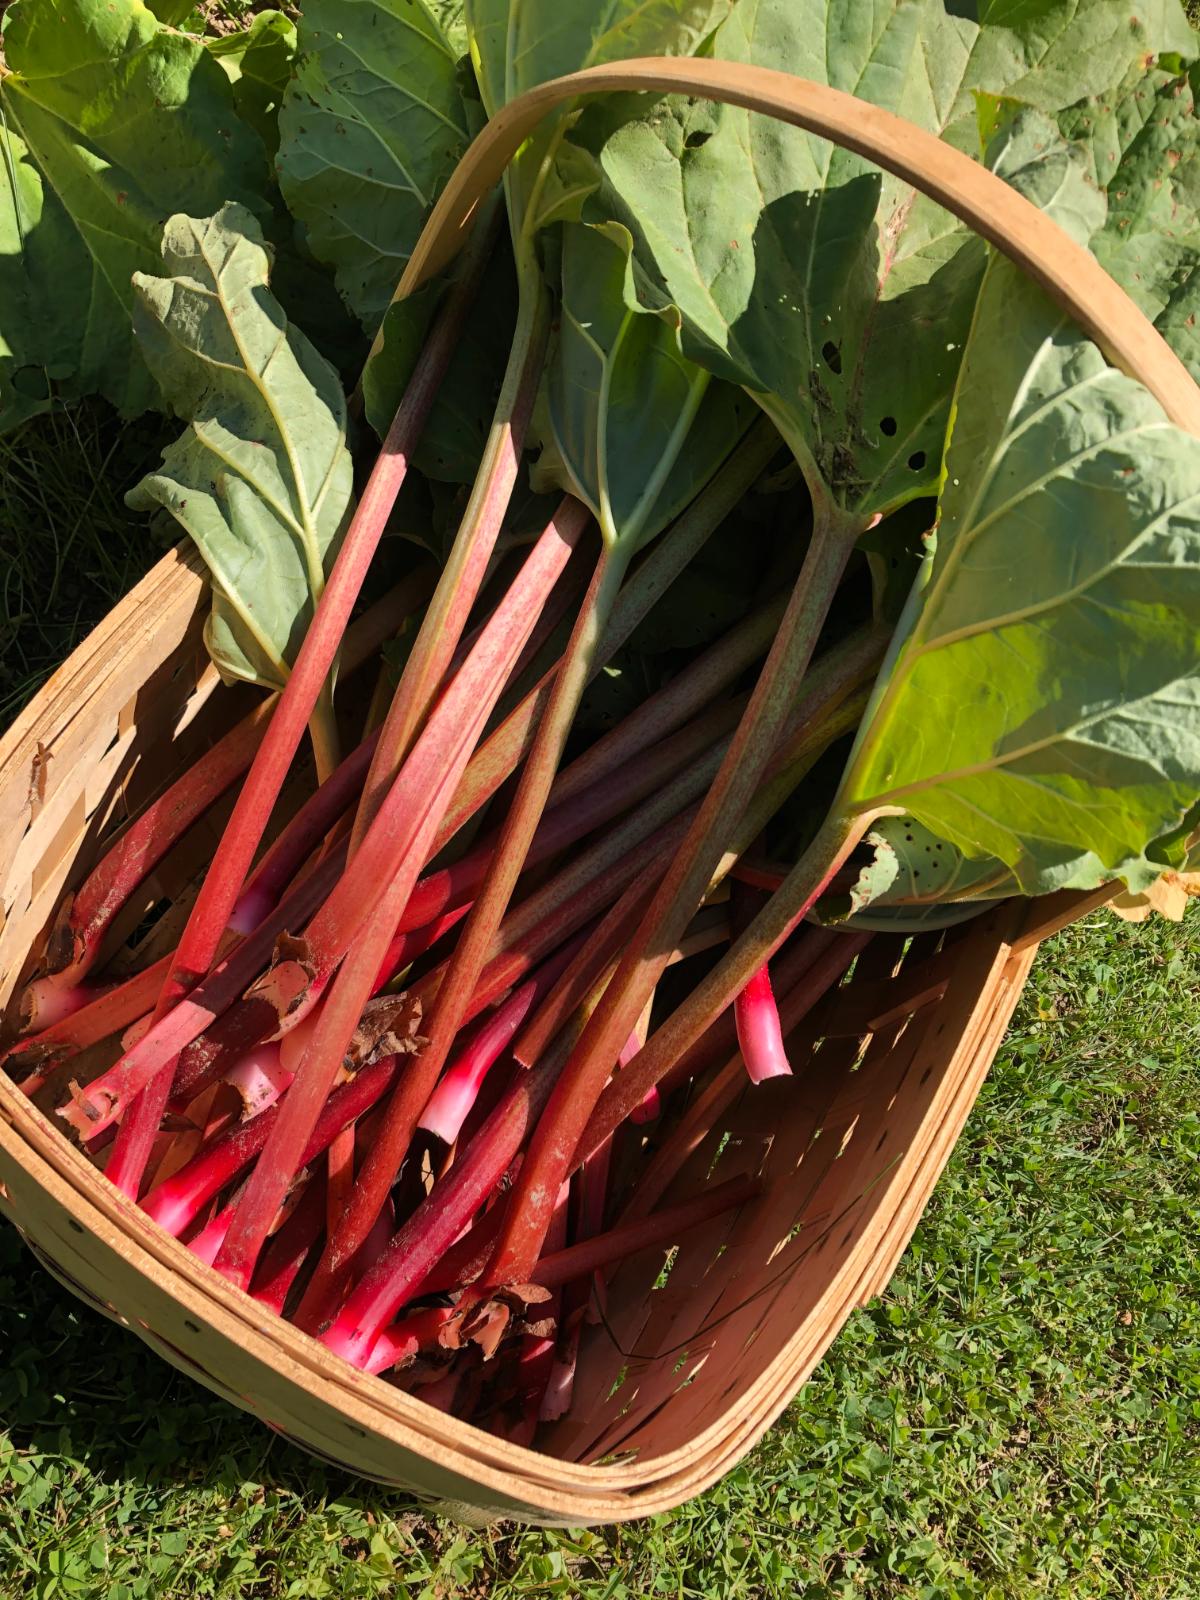 Rhubarb in a harvest basket